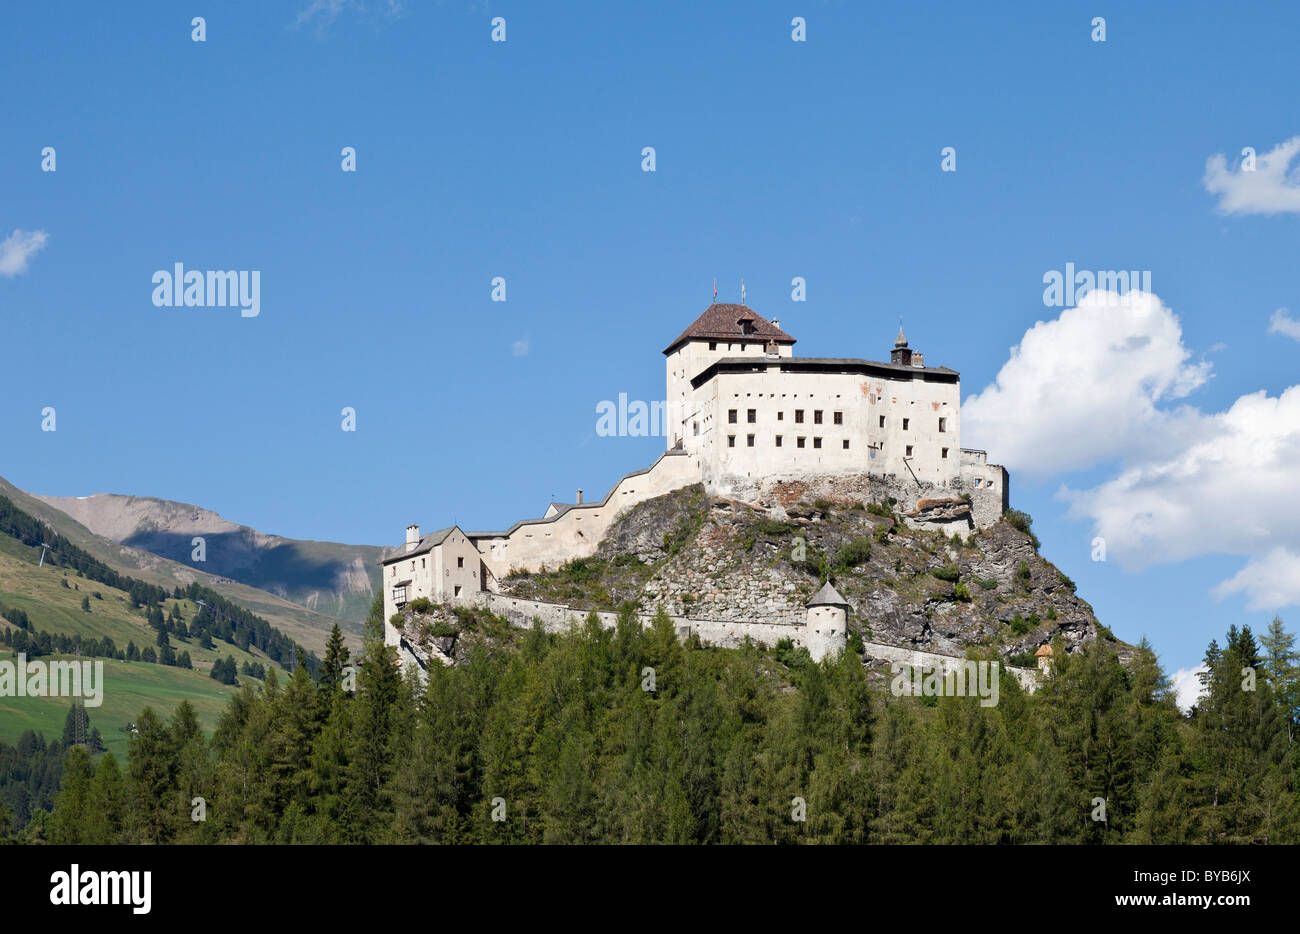 Bergpanorama mit Schloss Tarasp Schloss auf einem kegelförmigen Felsen-Hügel inmitten der Streusiedlung Tarasp Stockfoto